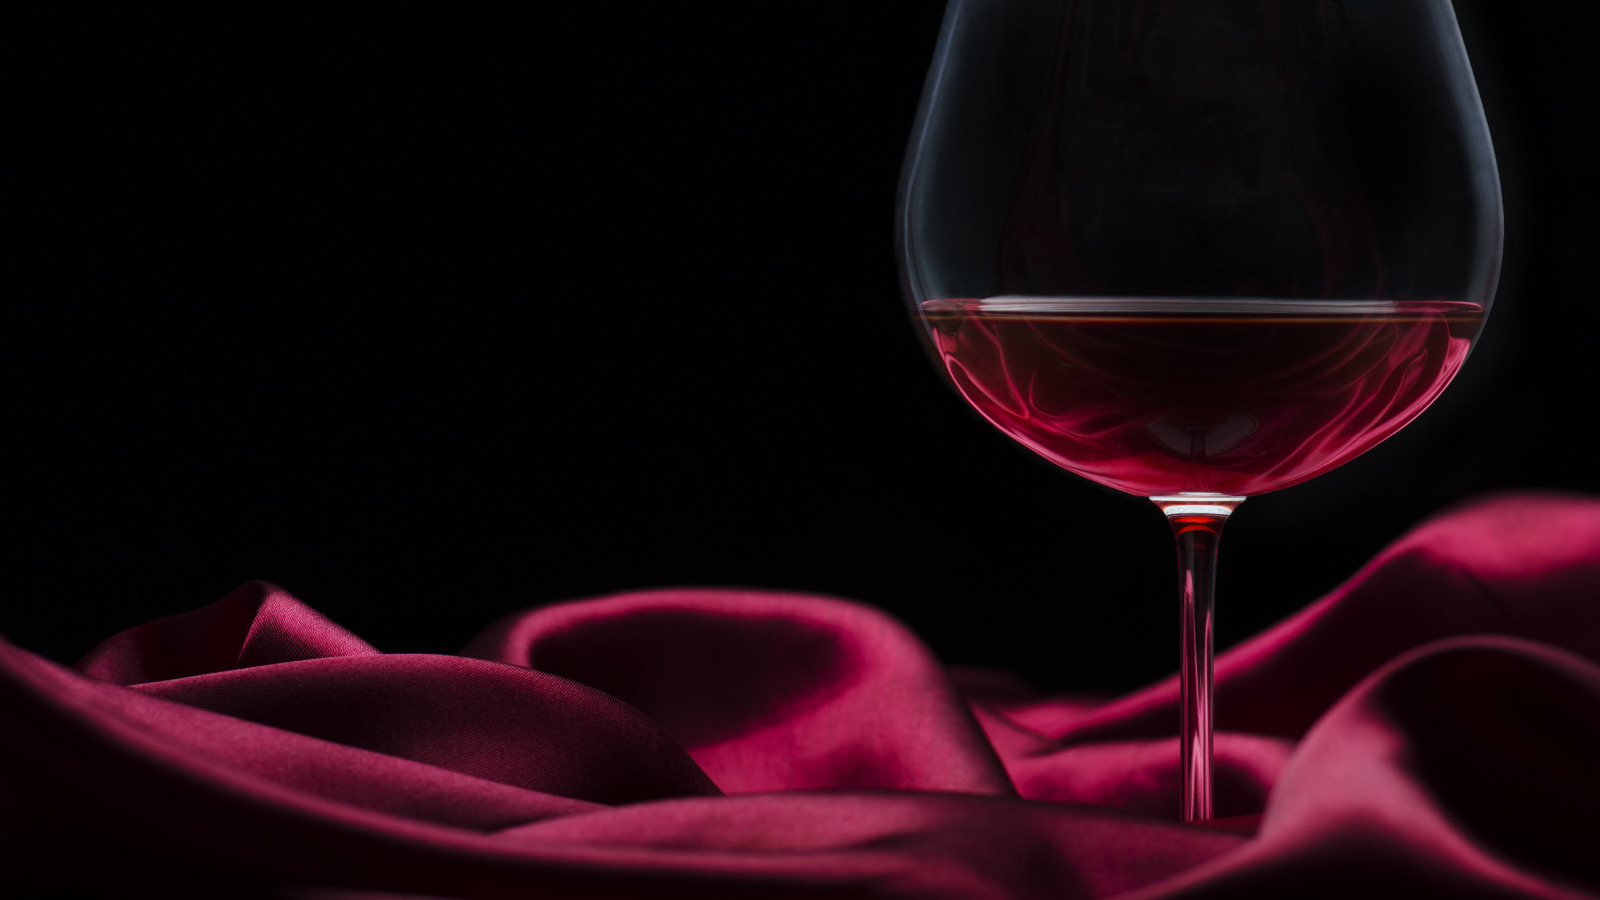 Бокал с вином. Бокал красного вина. Красное вино в бокале. Бокал красного вина на черном фоне.